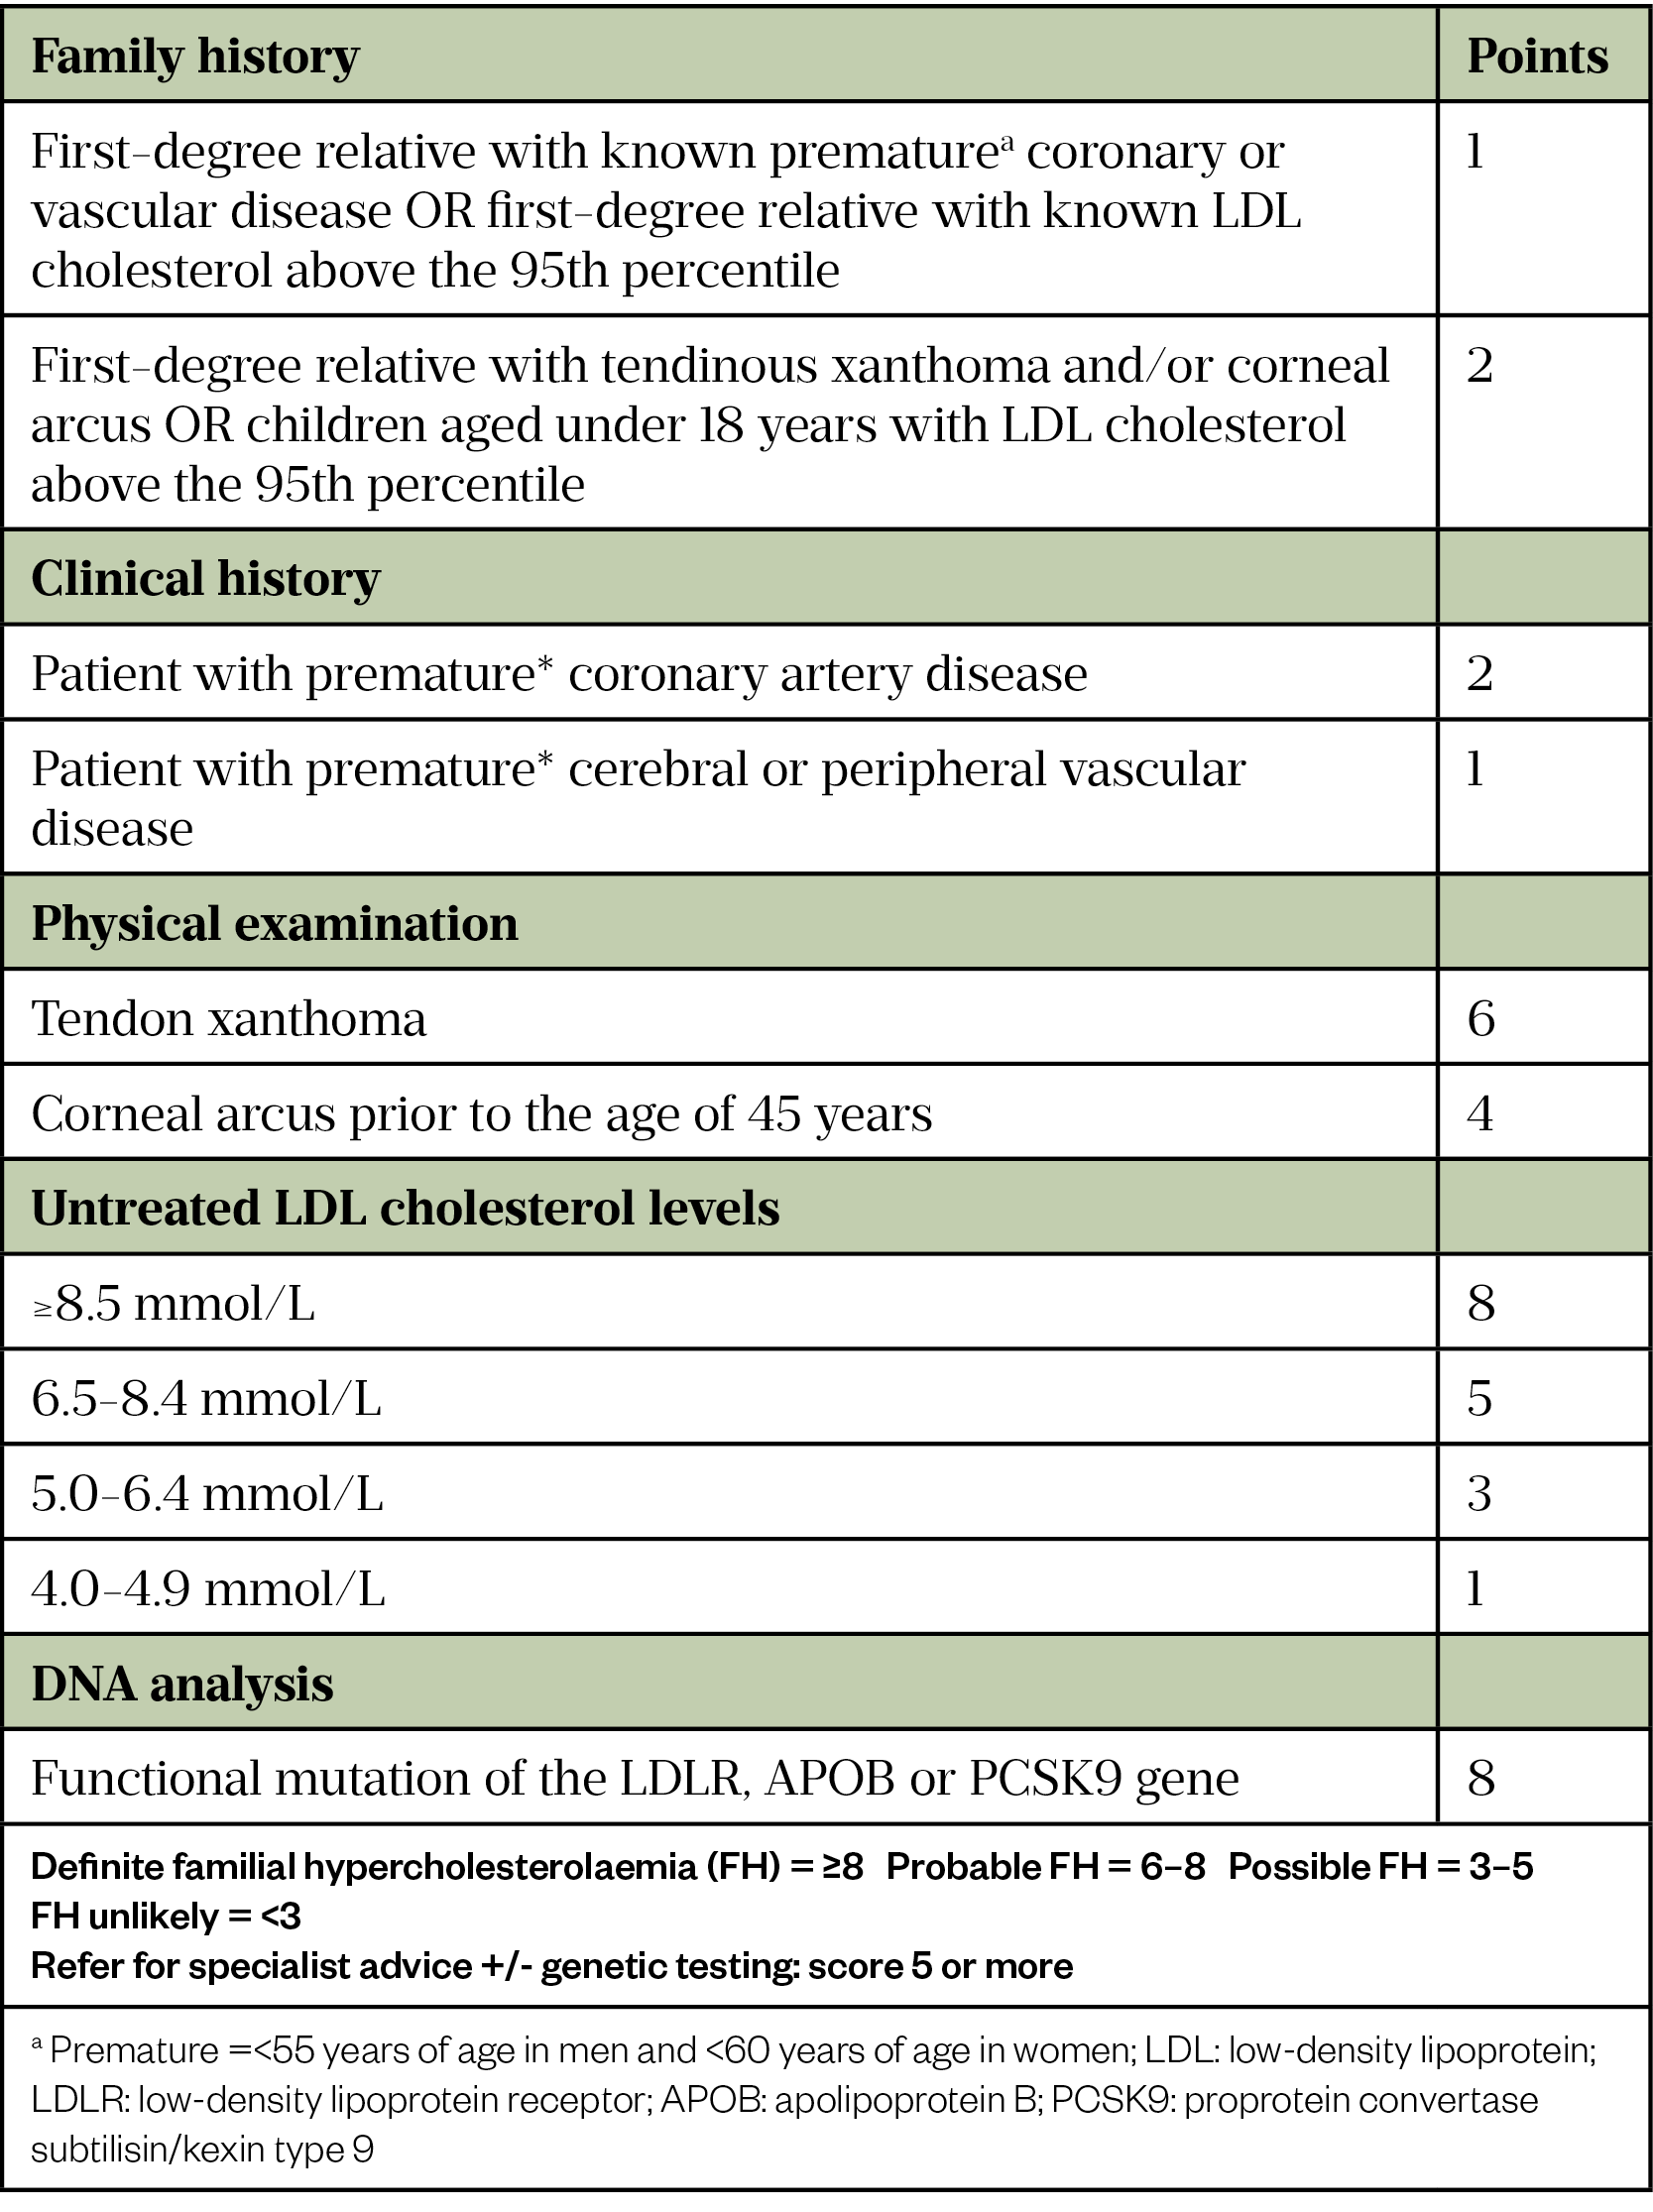 Table 2: Dutch Lipid Clinic Network criteria for familial hypercholesterolaemia